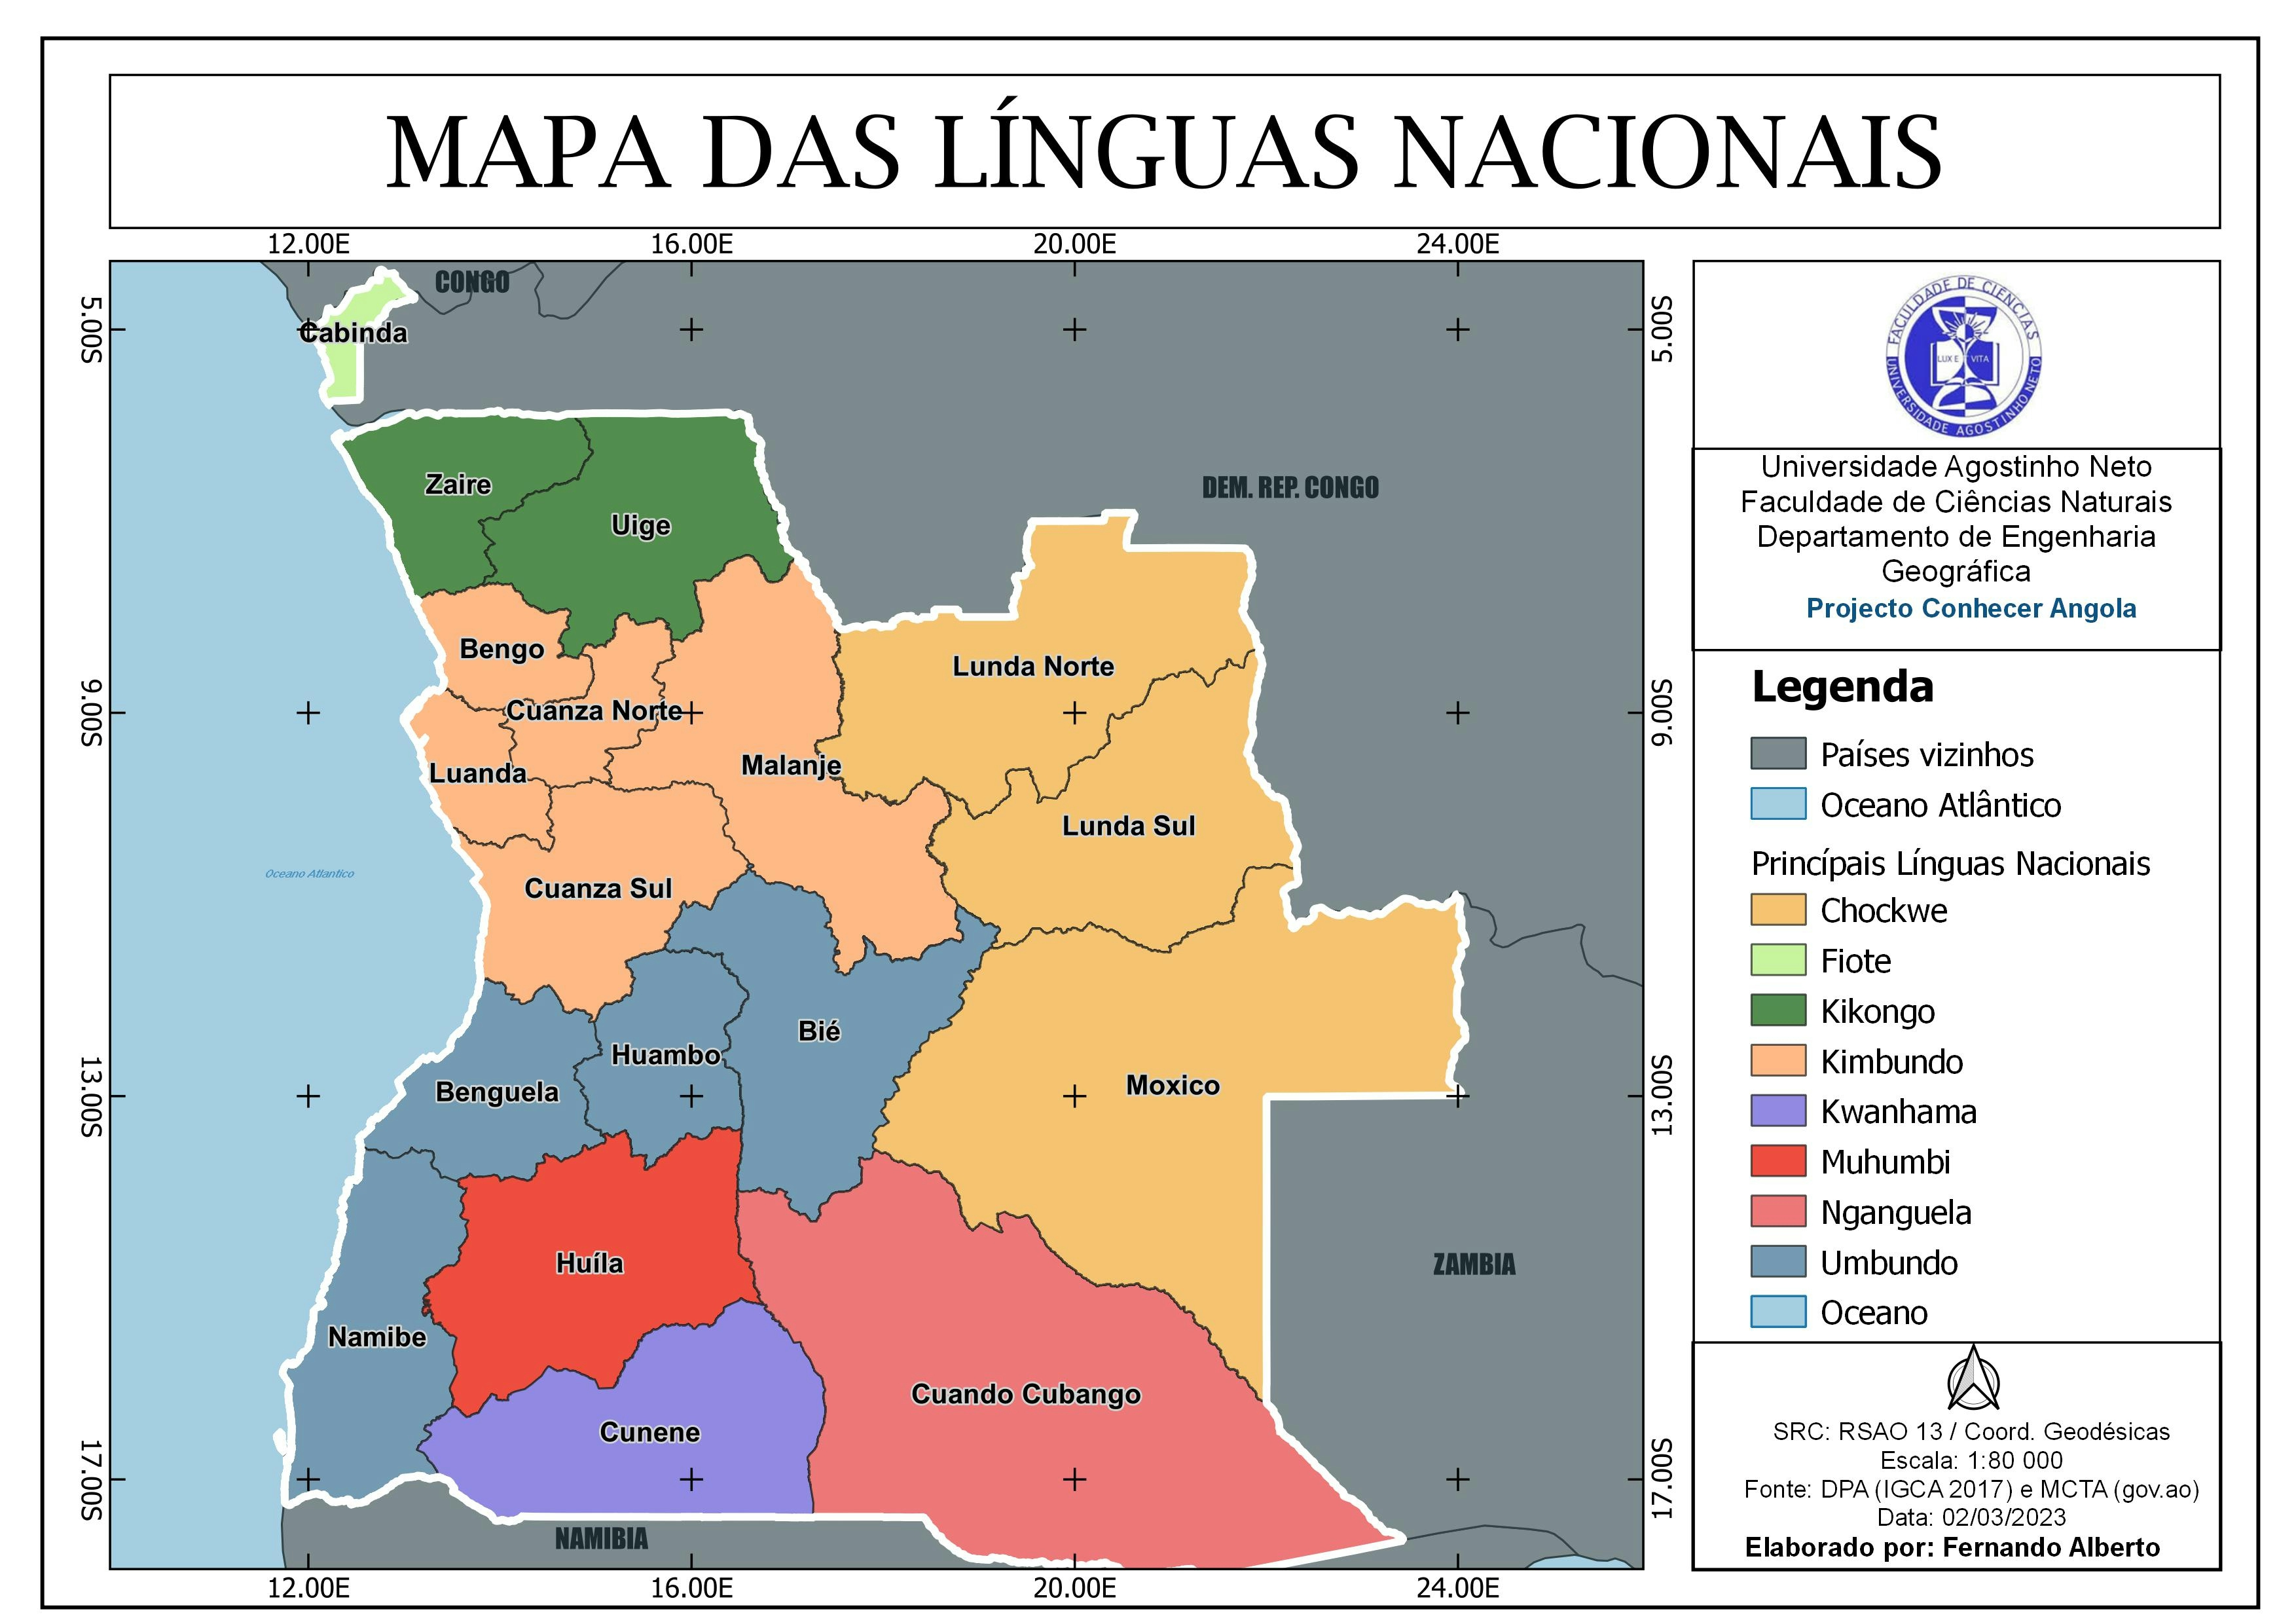 LÍNGUAS NACIONAIS DE ANGOLA